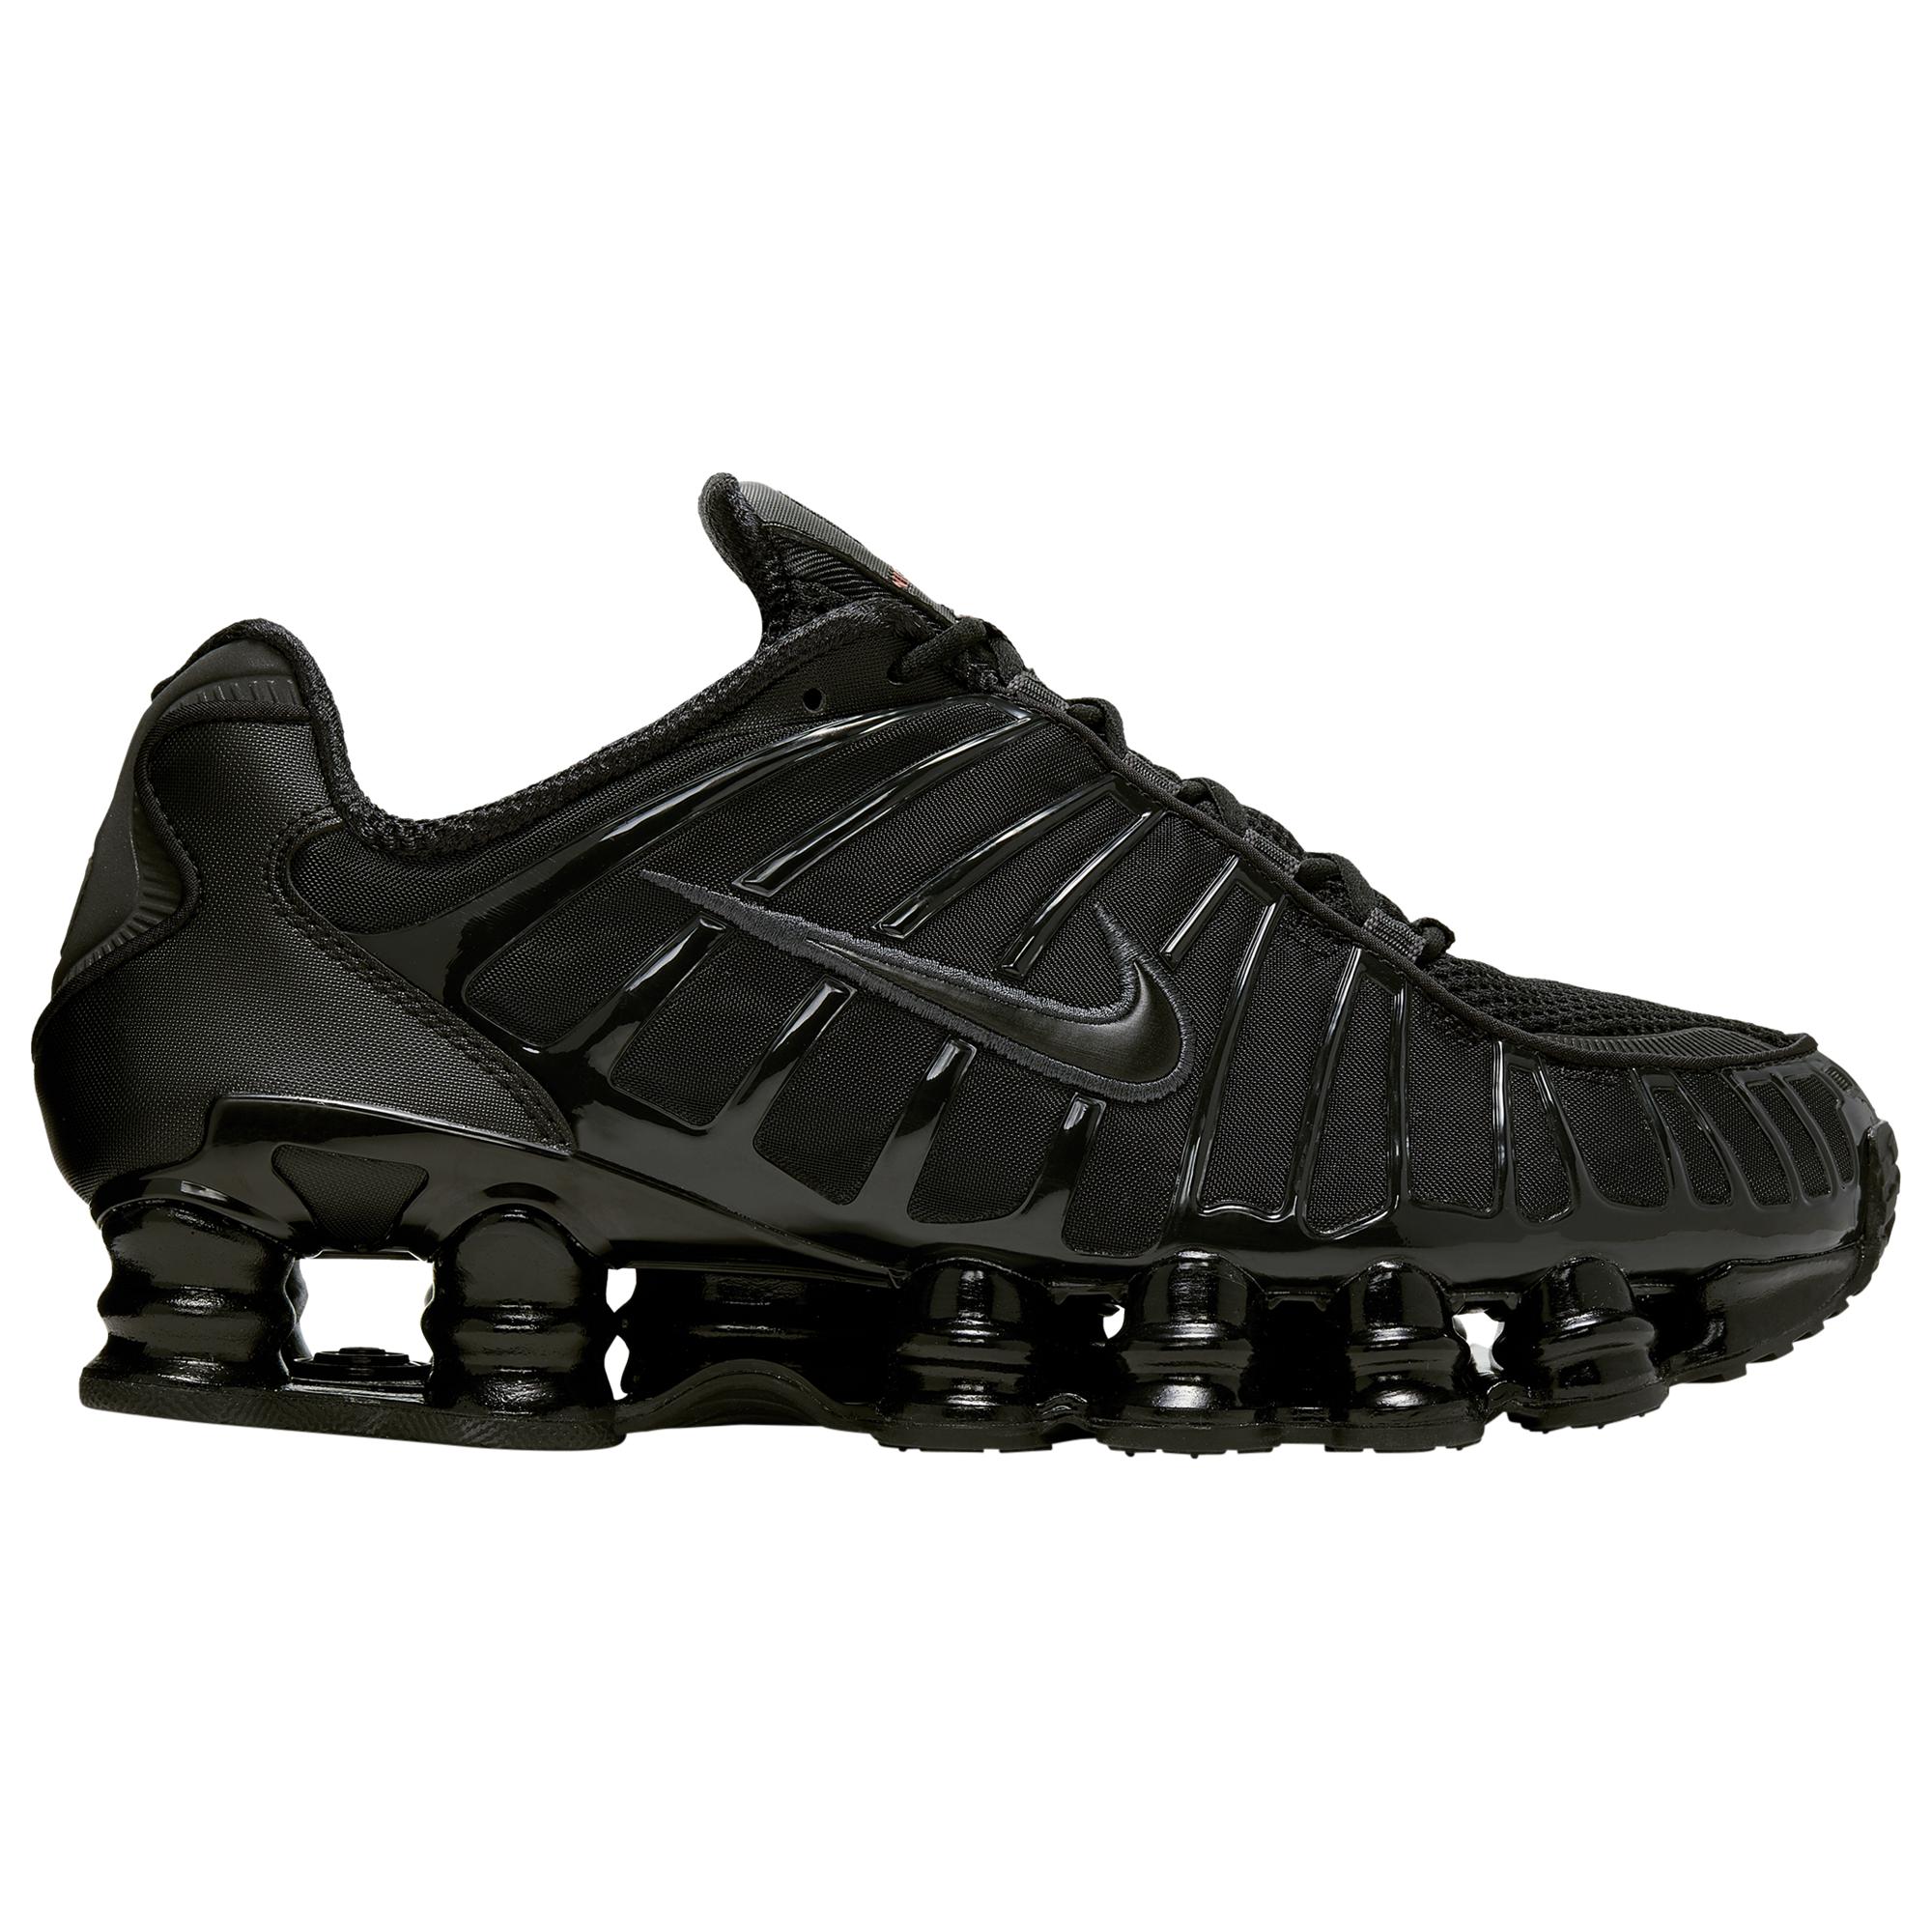 Nike Synthetic Shox Tl - Shoes in Black/Black/Black (Black) for ...